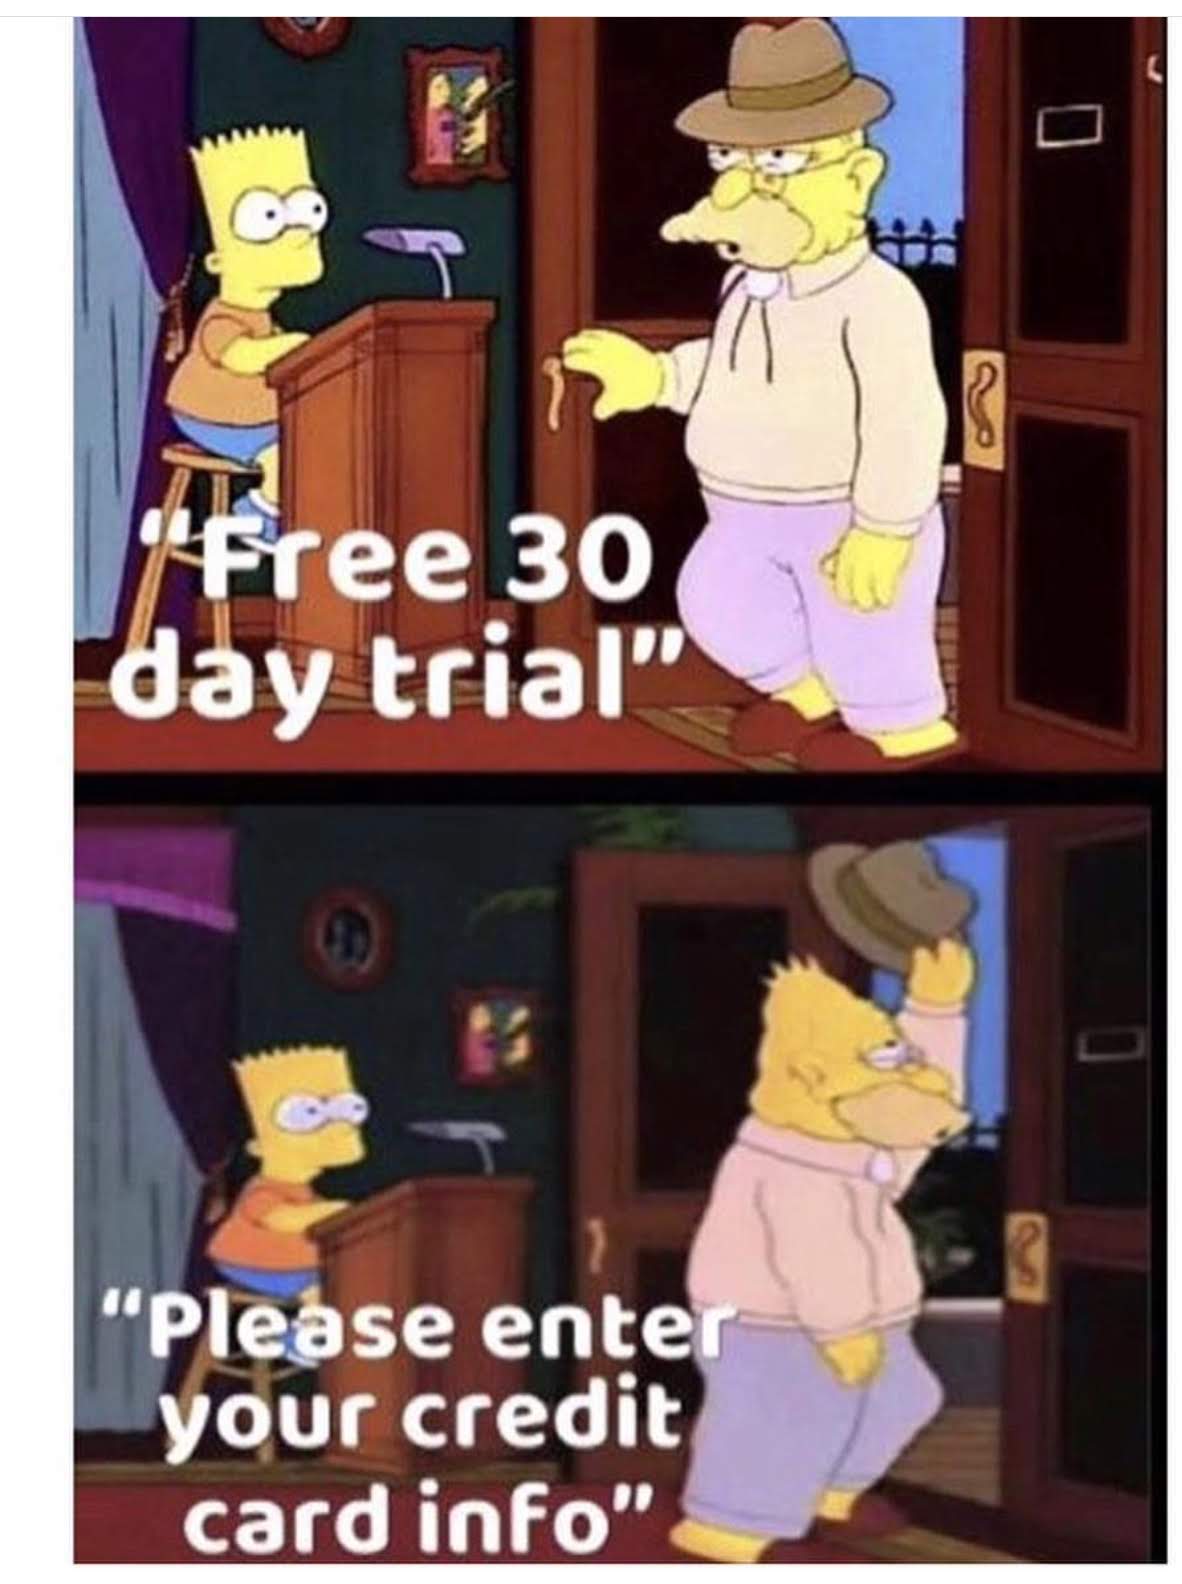 memes - free trial enter credit card meme - "Free 30 day trial" "Please enter your credit card info"